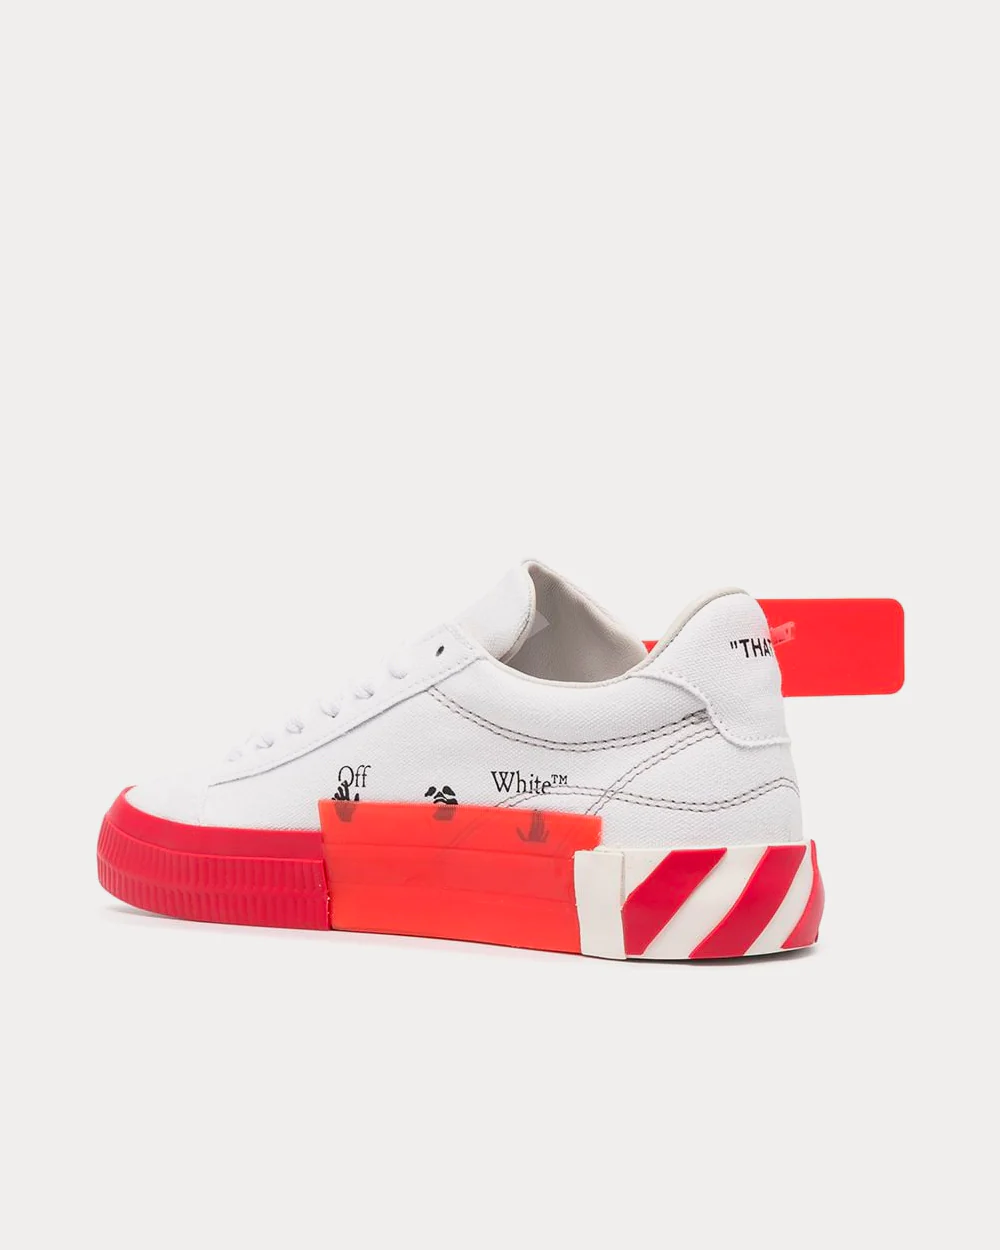 OFF WHITE Vulcanized White / Red Low Top Sneakers - pleasurestore